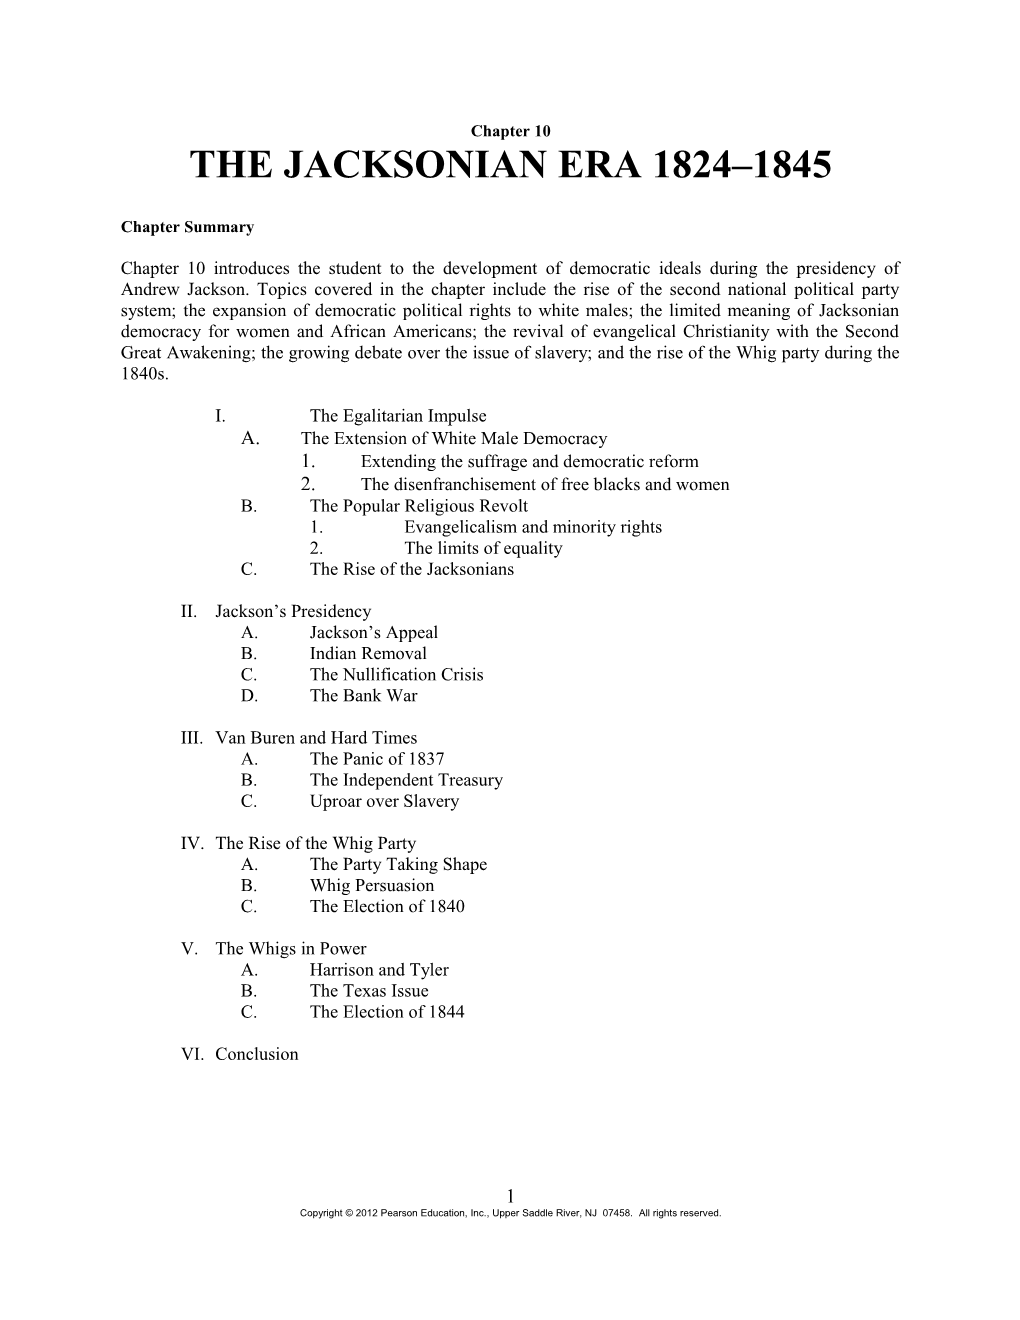 Chapter 10 the Jacksonian Era, 1824-1845